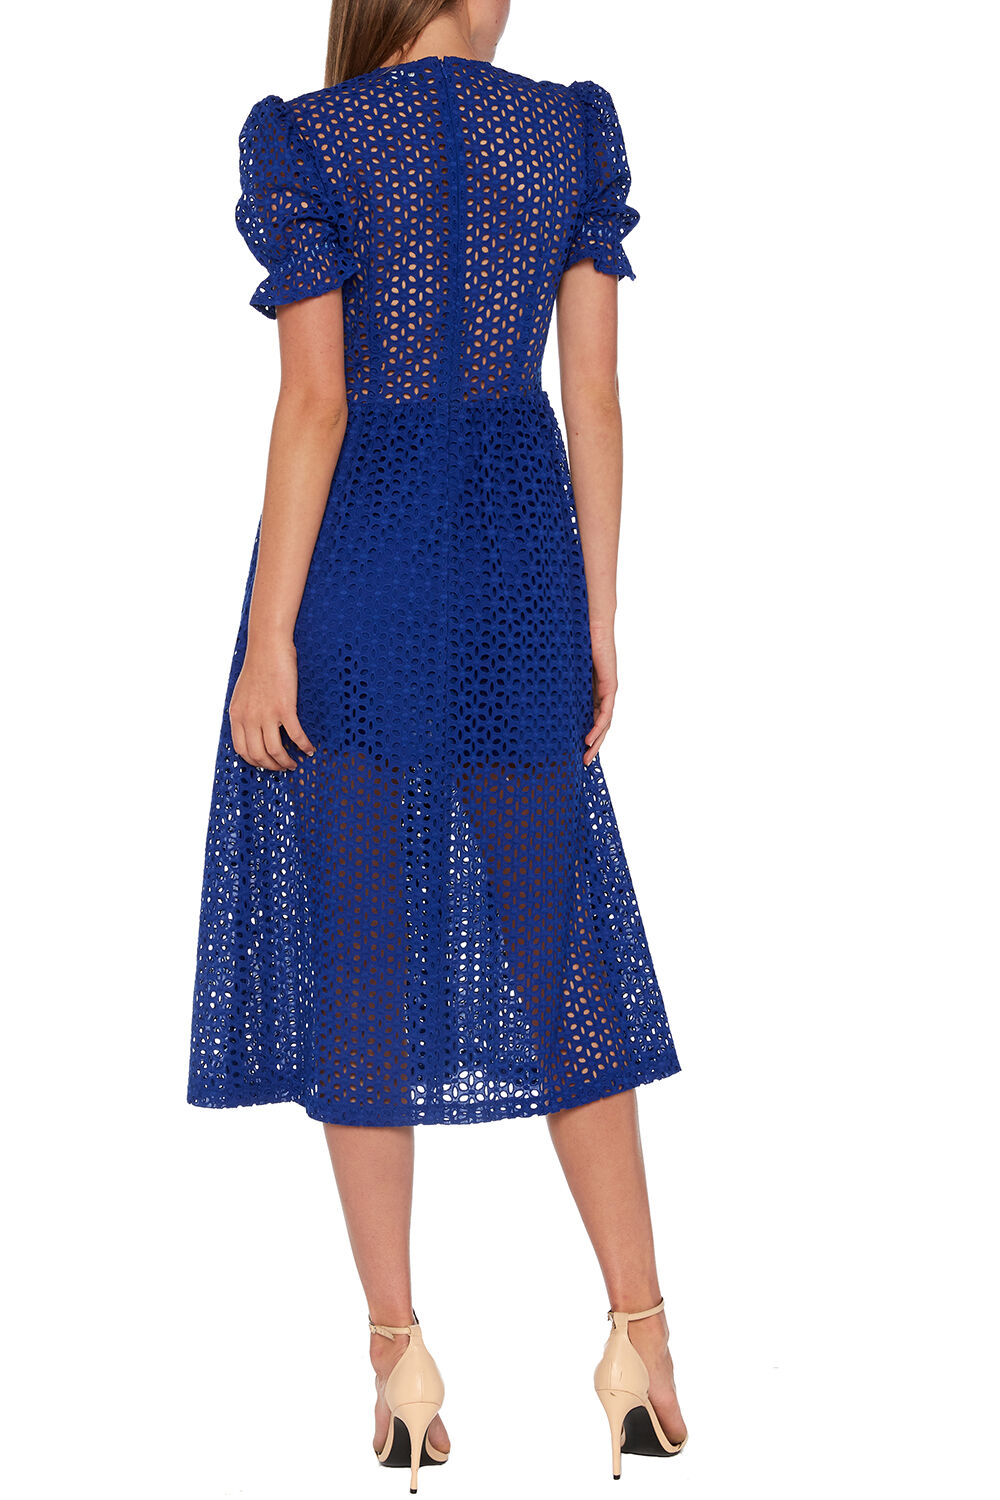 Jordan Lace Dress in Cobalt | Bardot